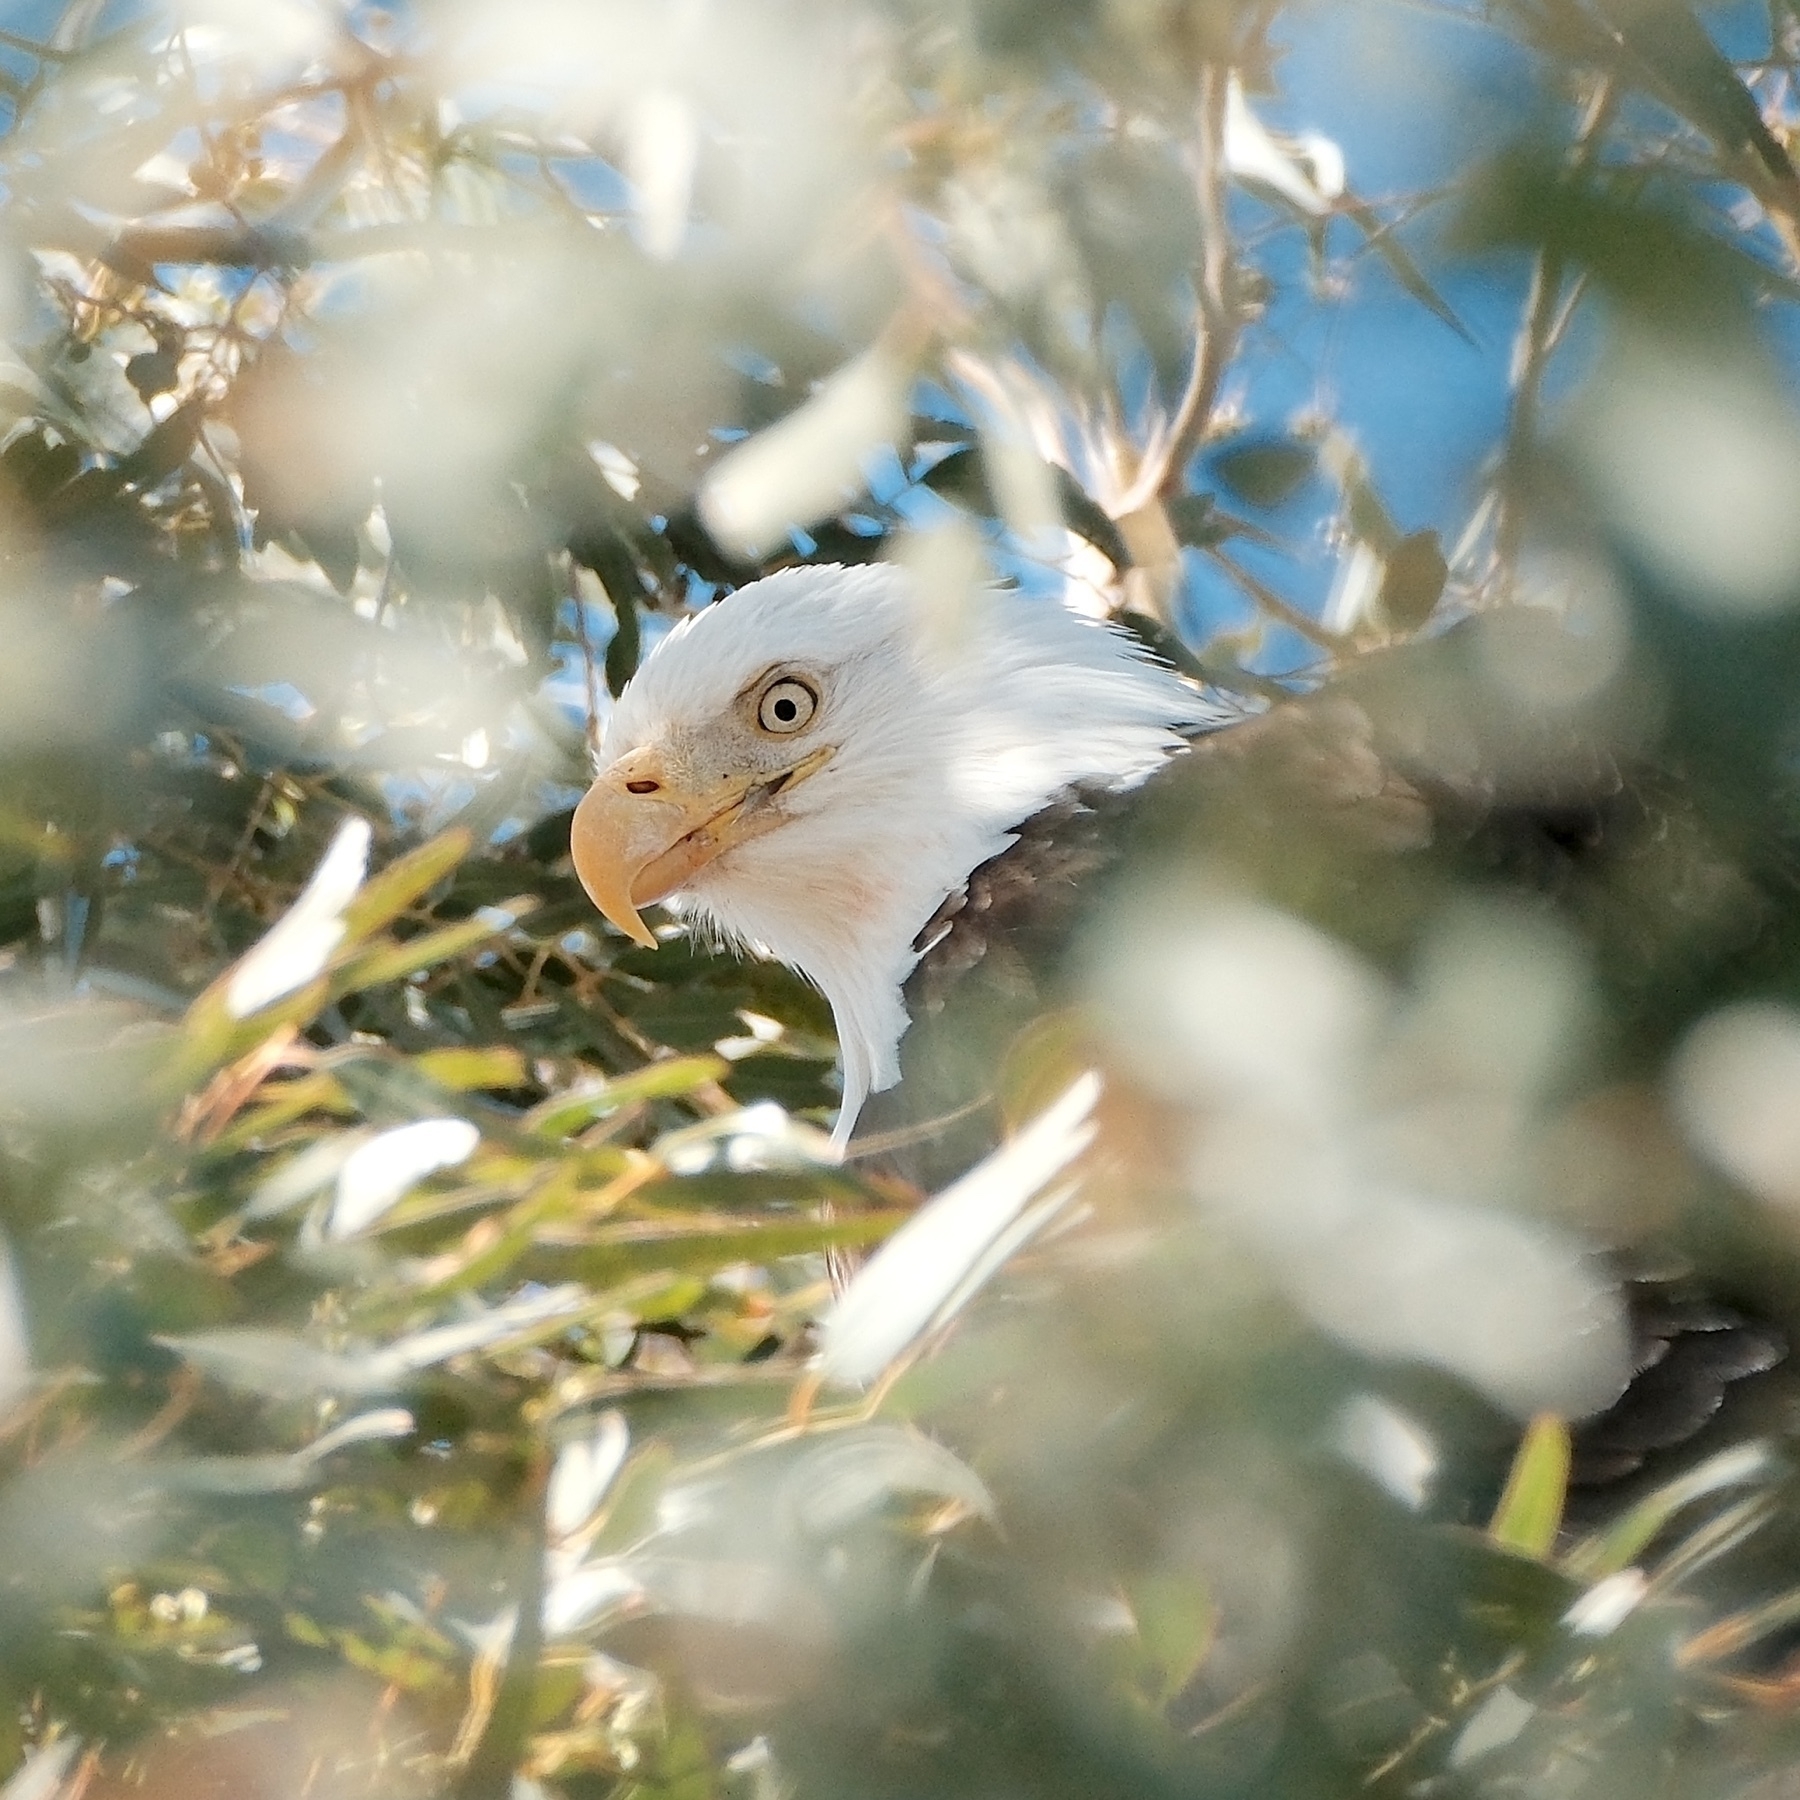 A Bald Eagle, white head blazing, peering down through a eucalyptus tree canopy